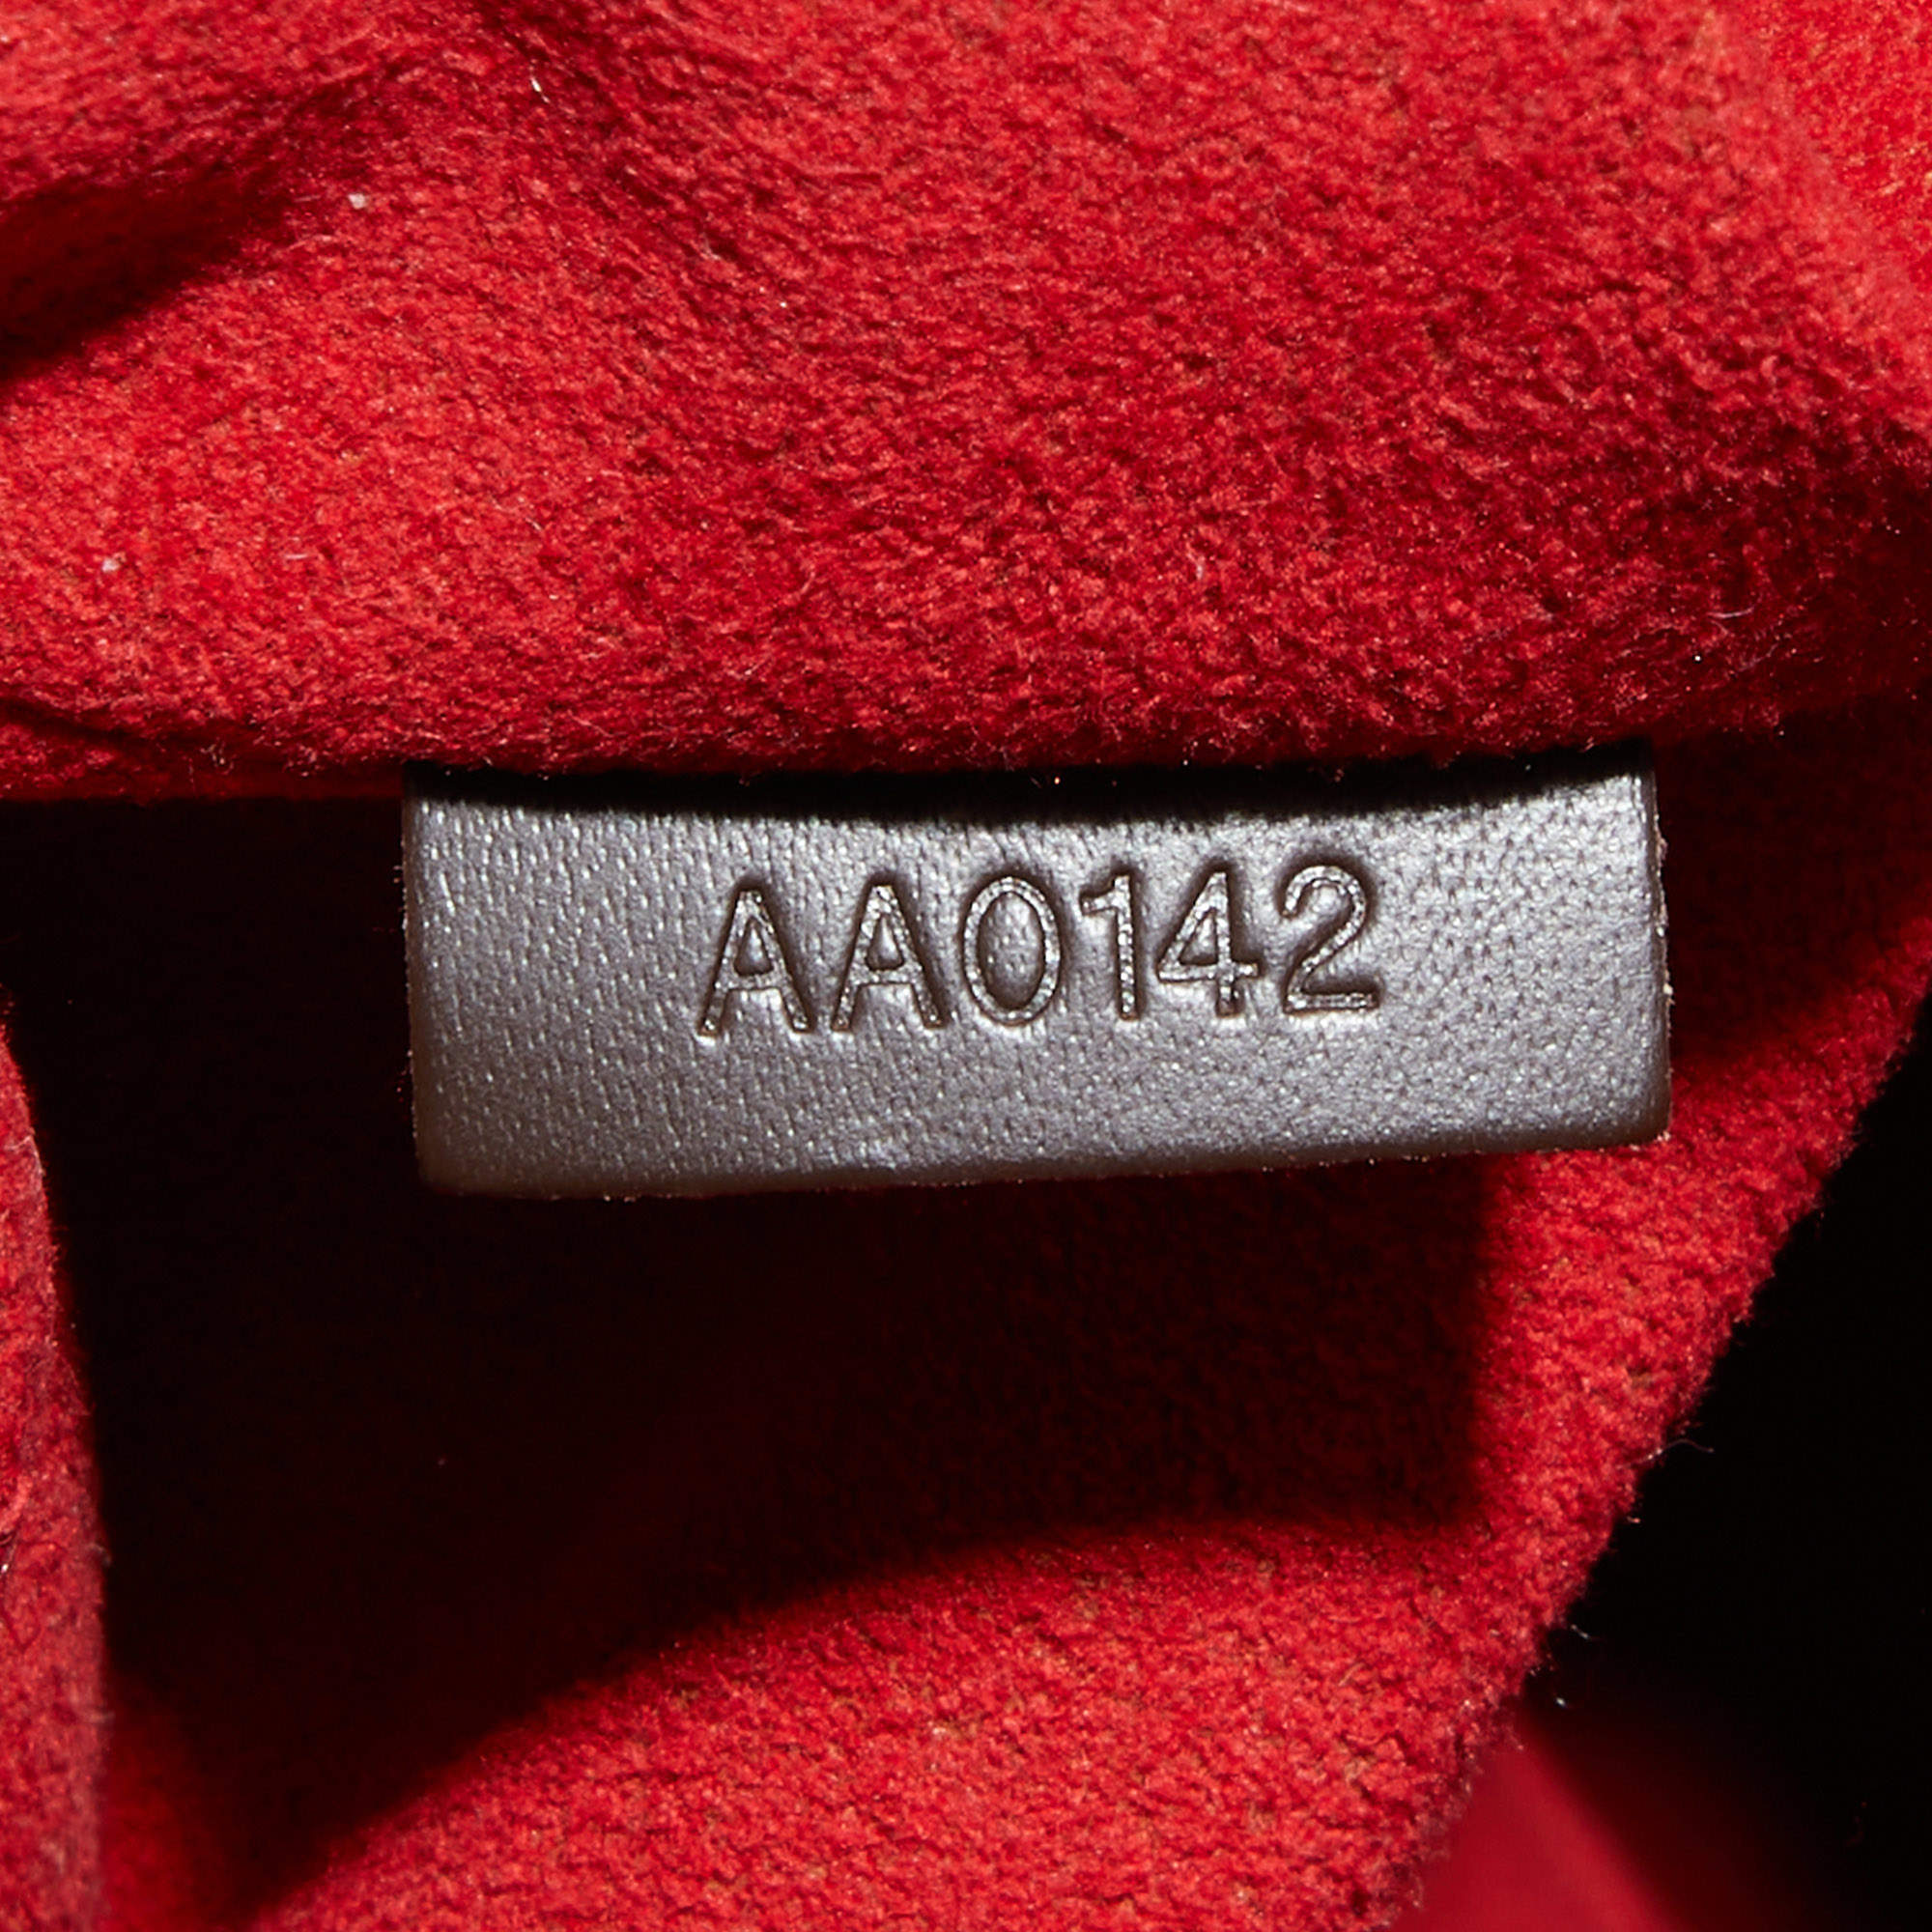 Louis Vuitton Evora MM Damier Ebene 2011 Size 38x10,5x30cm with Bag, Strap  and Dustbag Harga 10.000.000 #lvevorammdamier